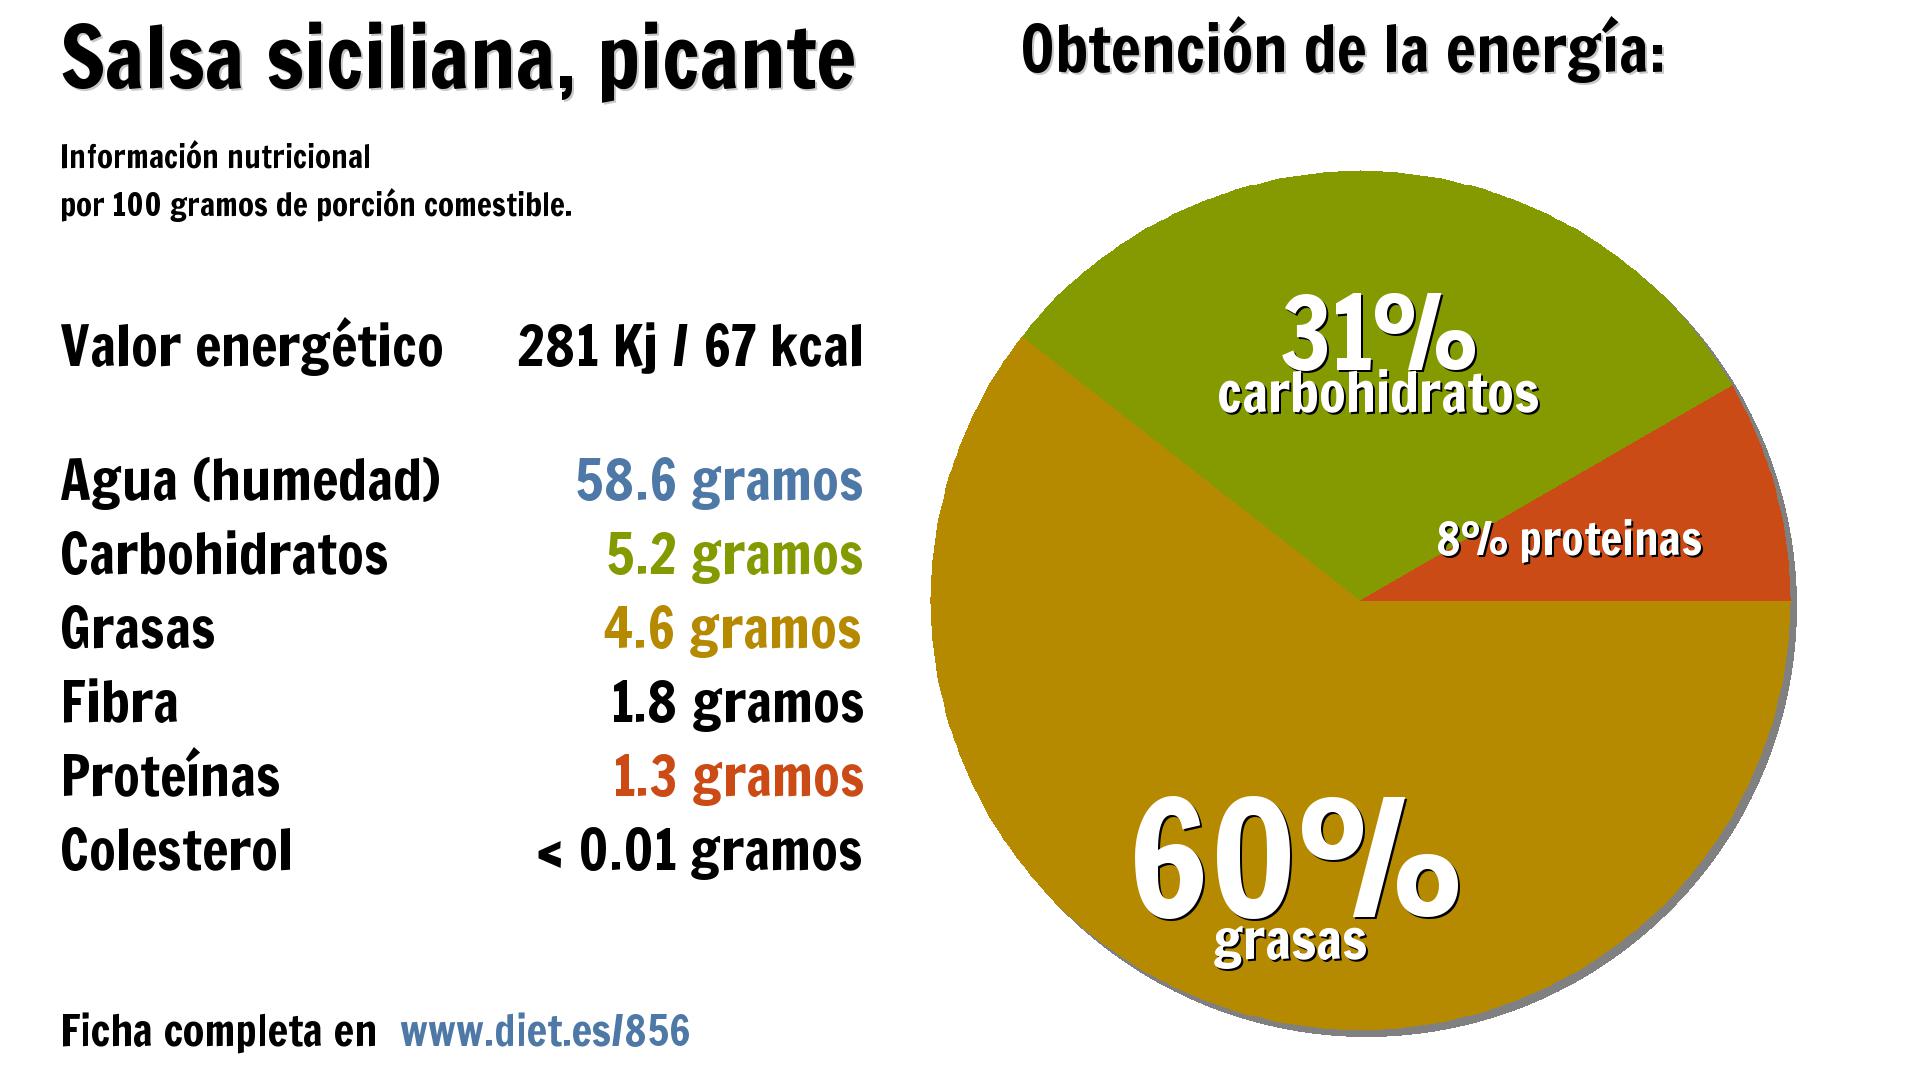 Salsa siciliana, picante: energía 281 Kj, agua 59 g., carbohidratos 5 g., grasas 5 g., fibra 2 g. y proteínas 1 g.